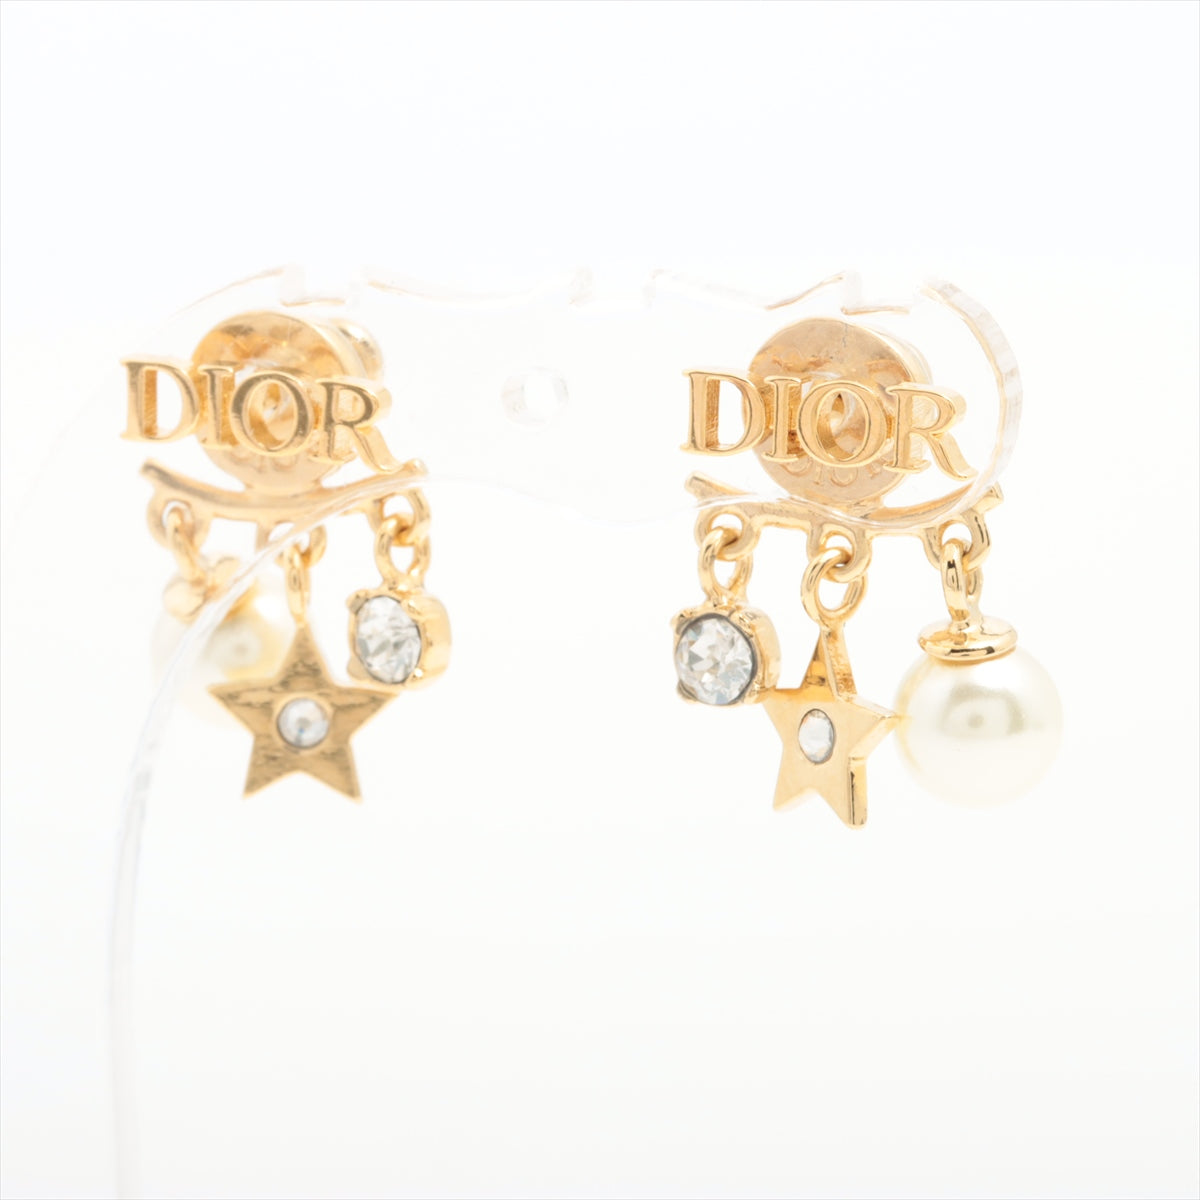 Christian Dior Dio(r)evolution Dio(r)evolution Piercing jewelry (for both ears) GP x rhinestone x imitation pearl Gold